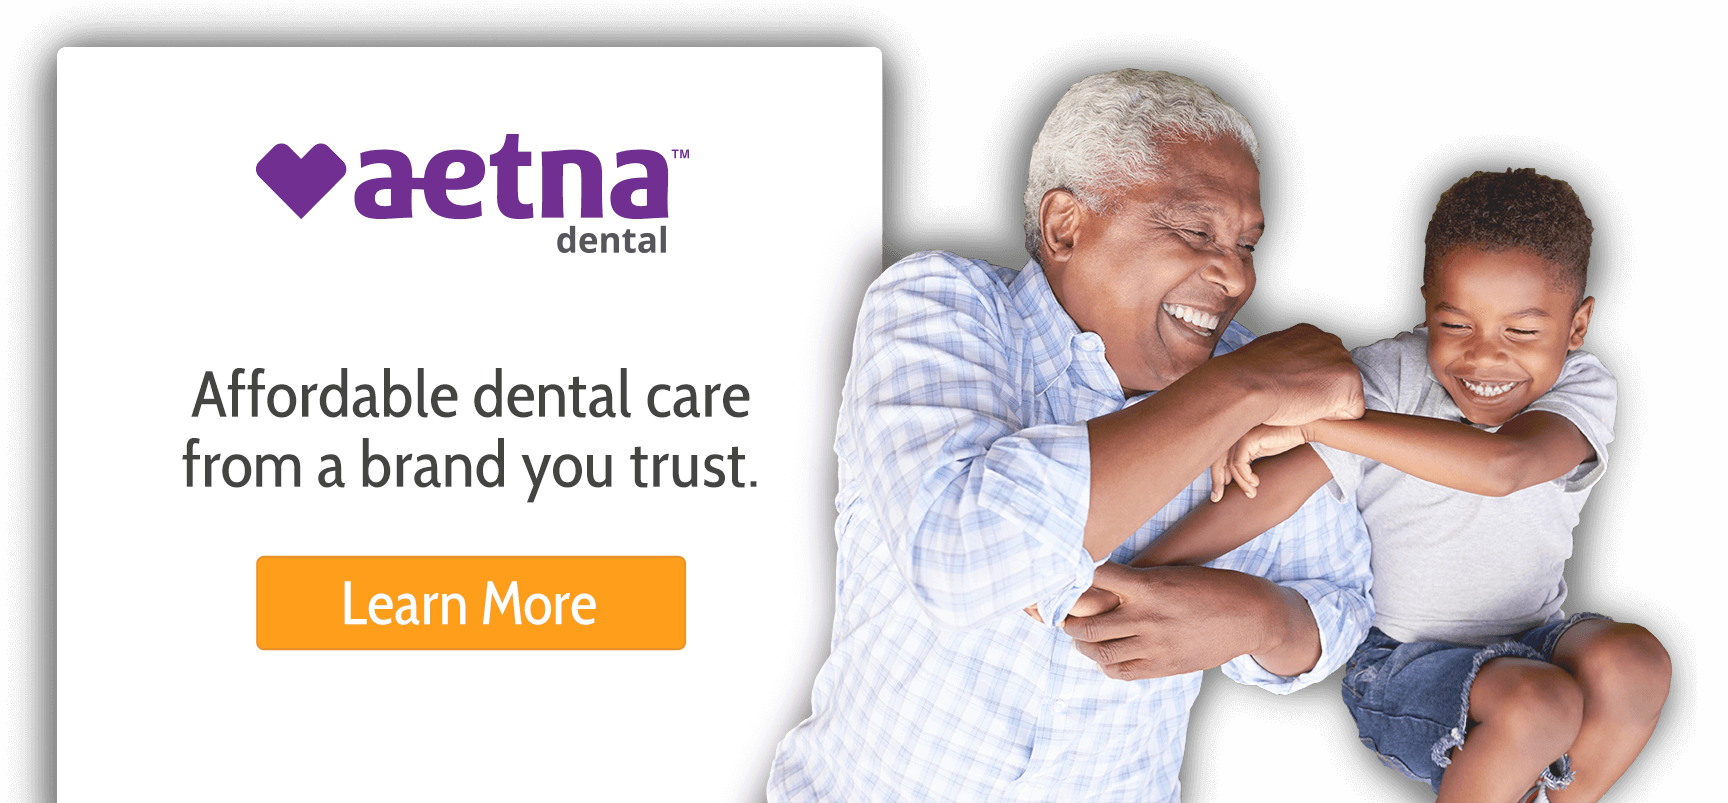 Aetna Dental Plans, a Dental Insurance Alternative Join. Save. Smile